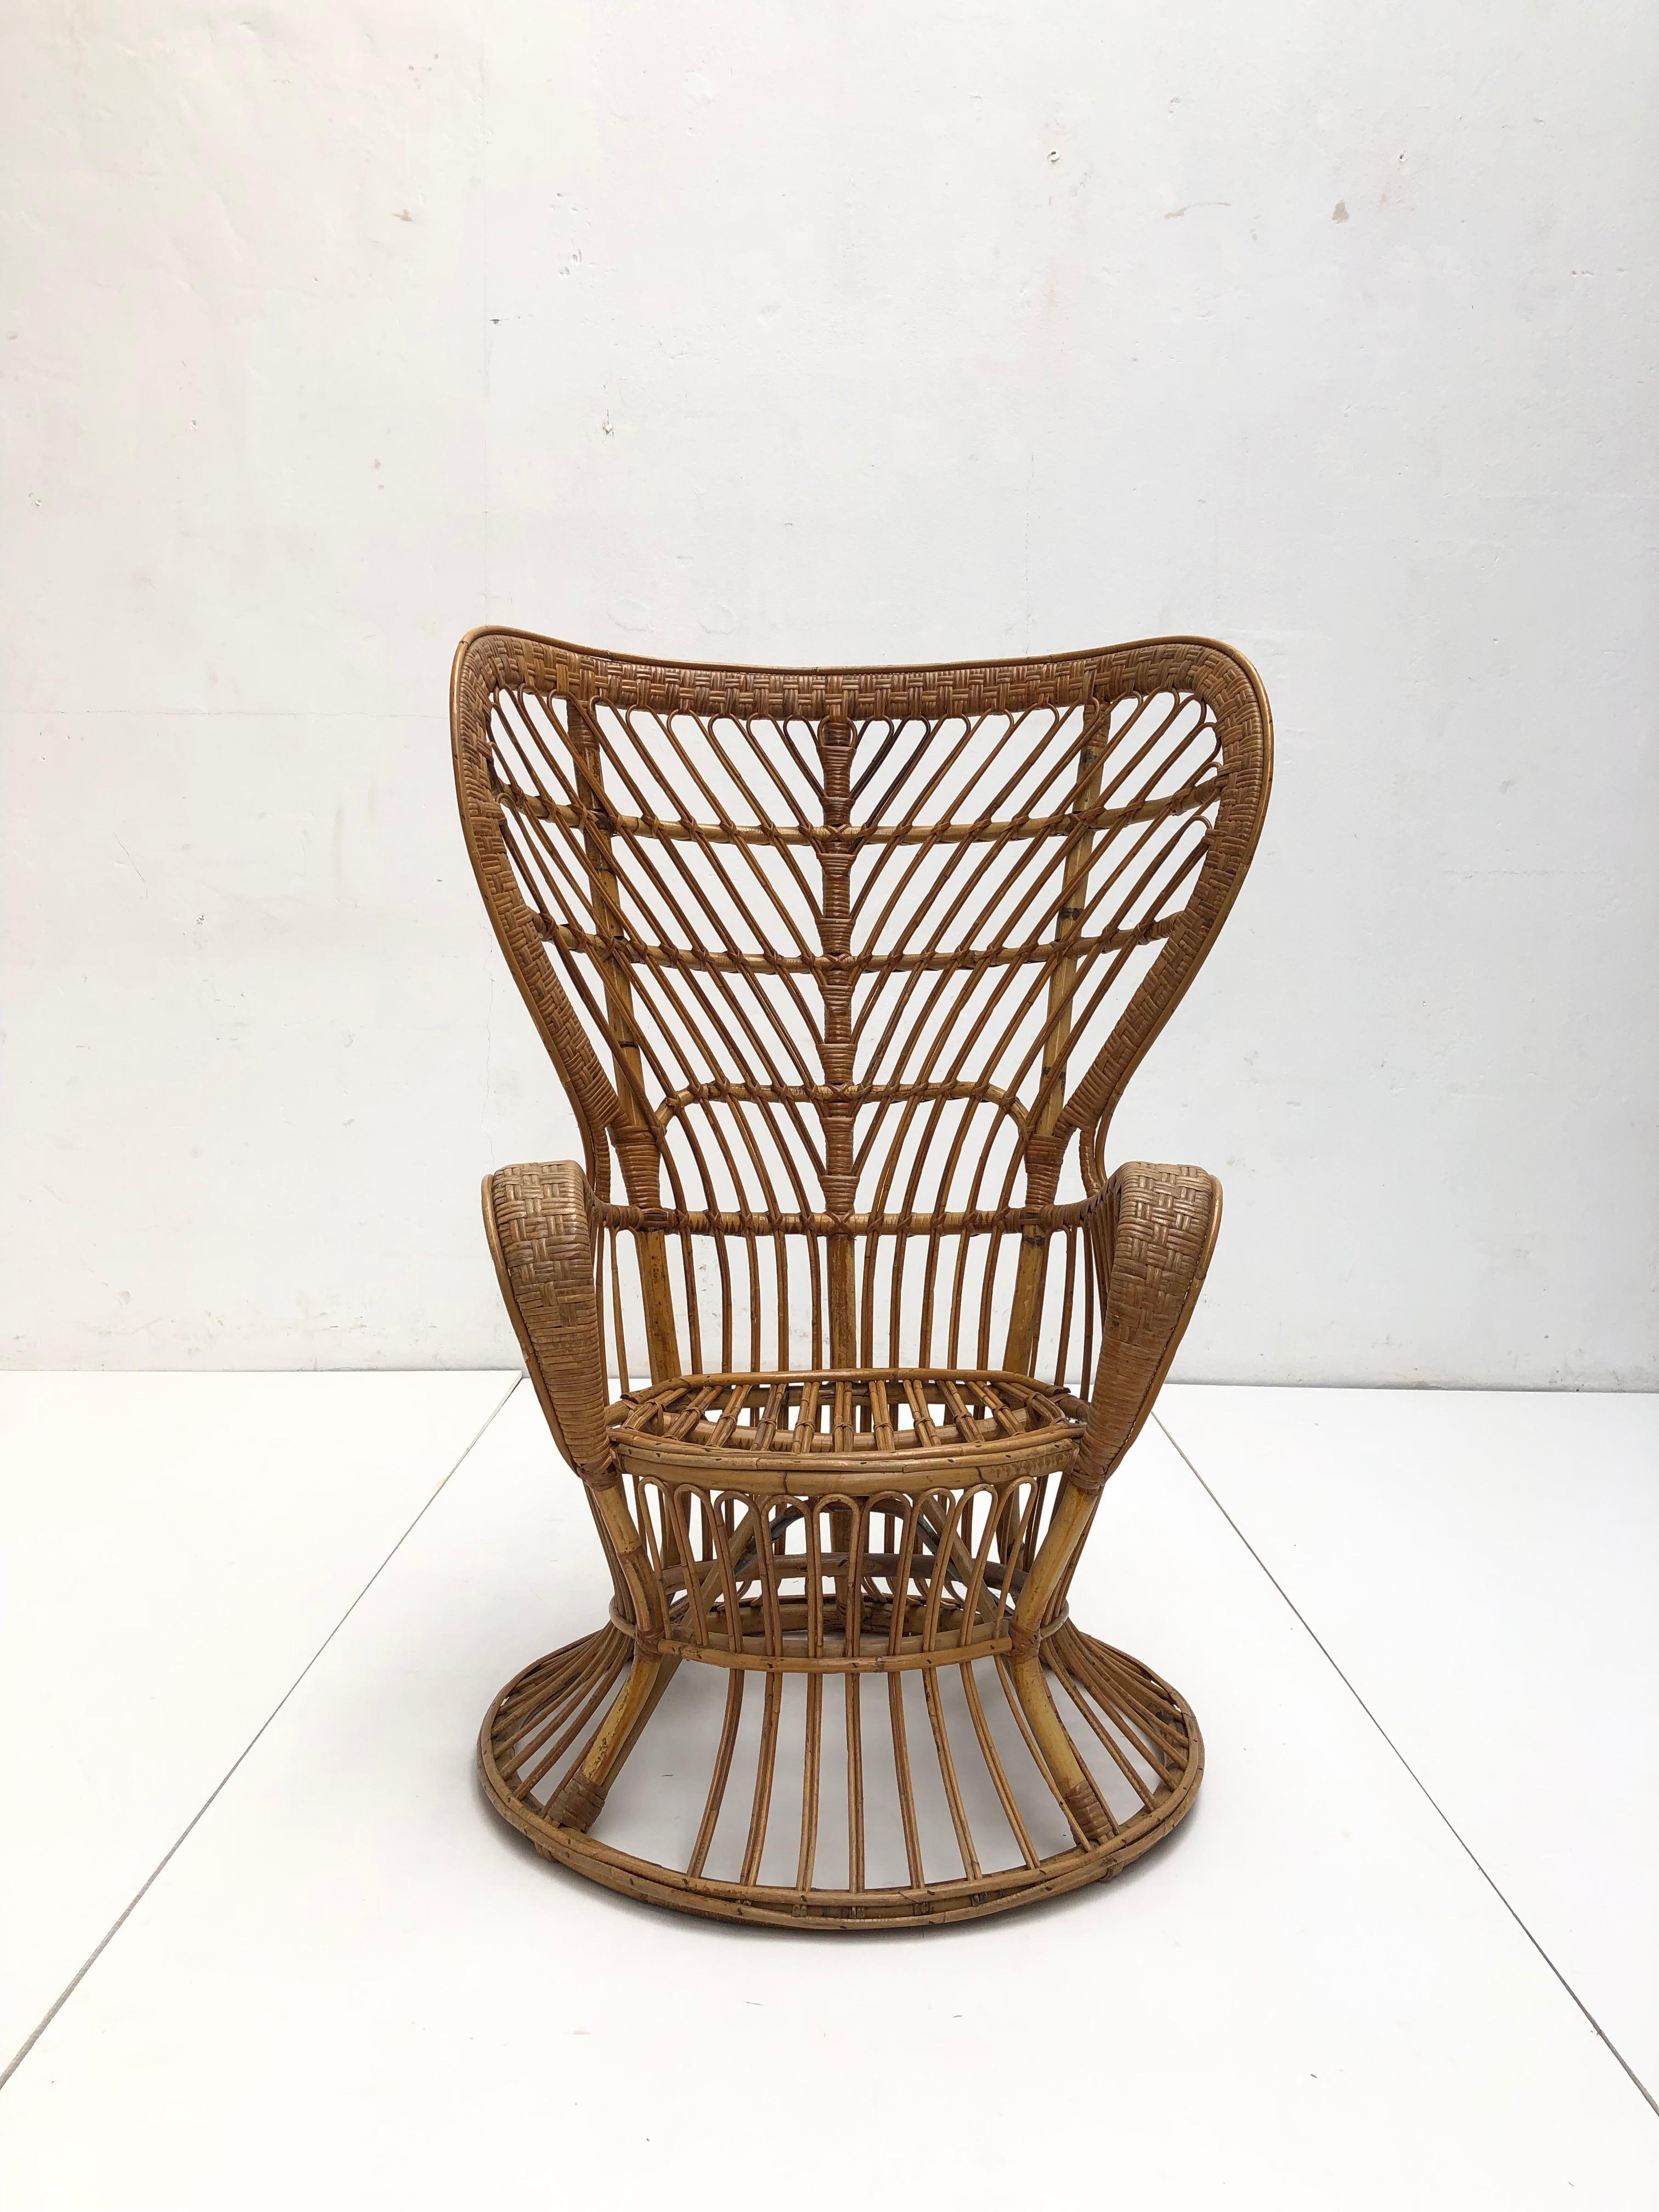 bamboo wicker chair -china -b2b -forum -blog -wikipedia -.cn -.gov -alibaba